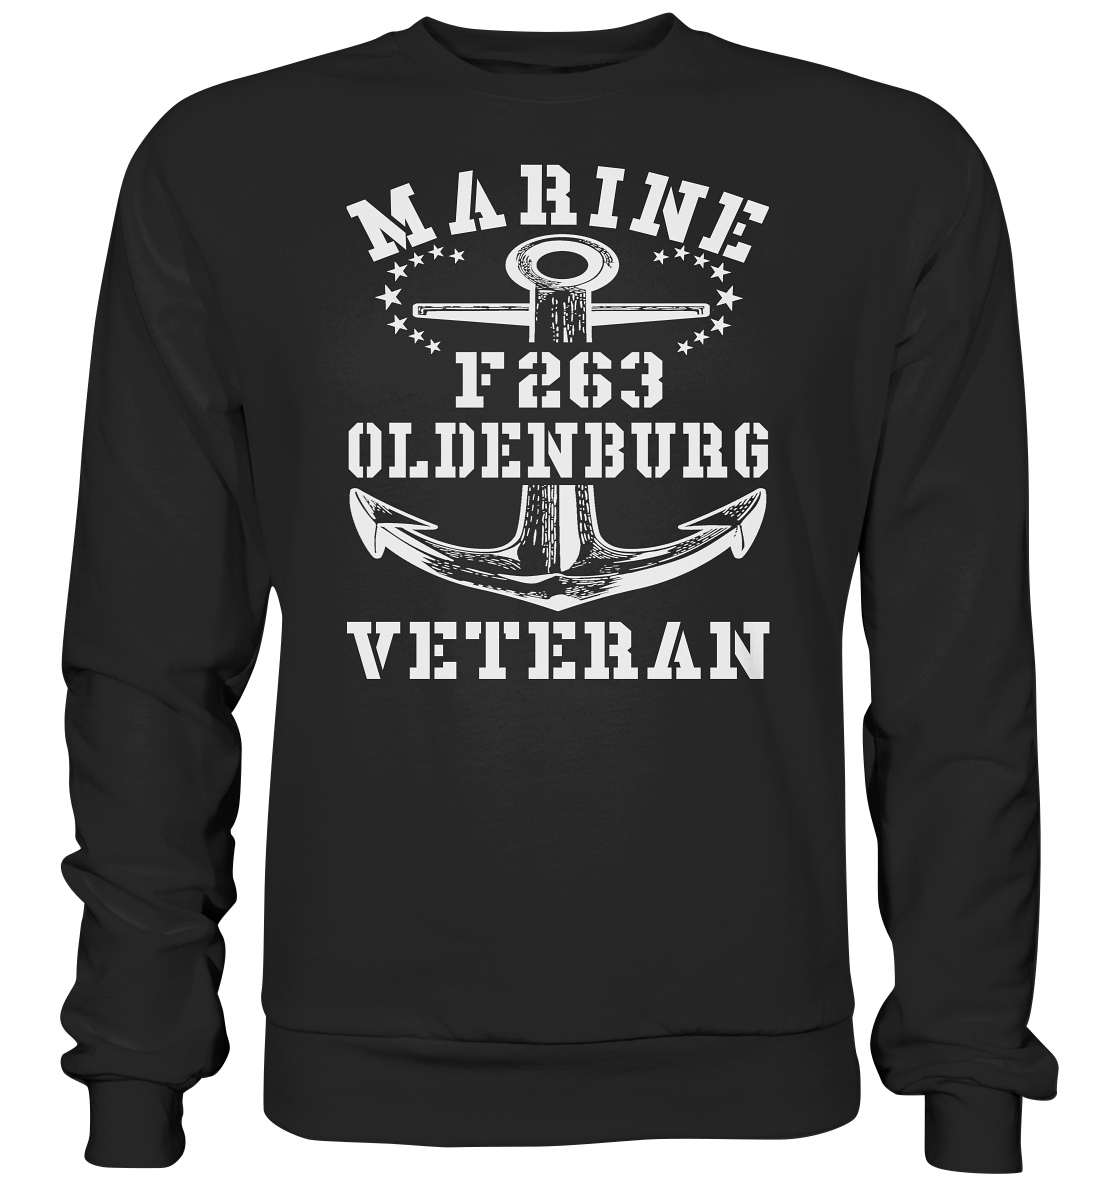 Korvette F263 OLDENBURG Marine Veteran  - Premium Sweatshirt